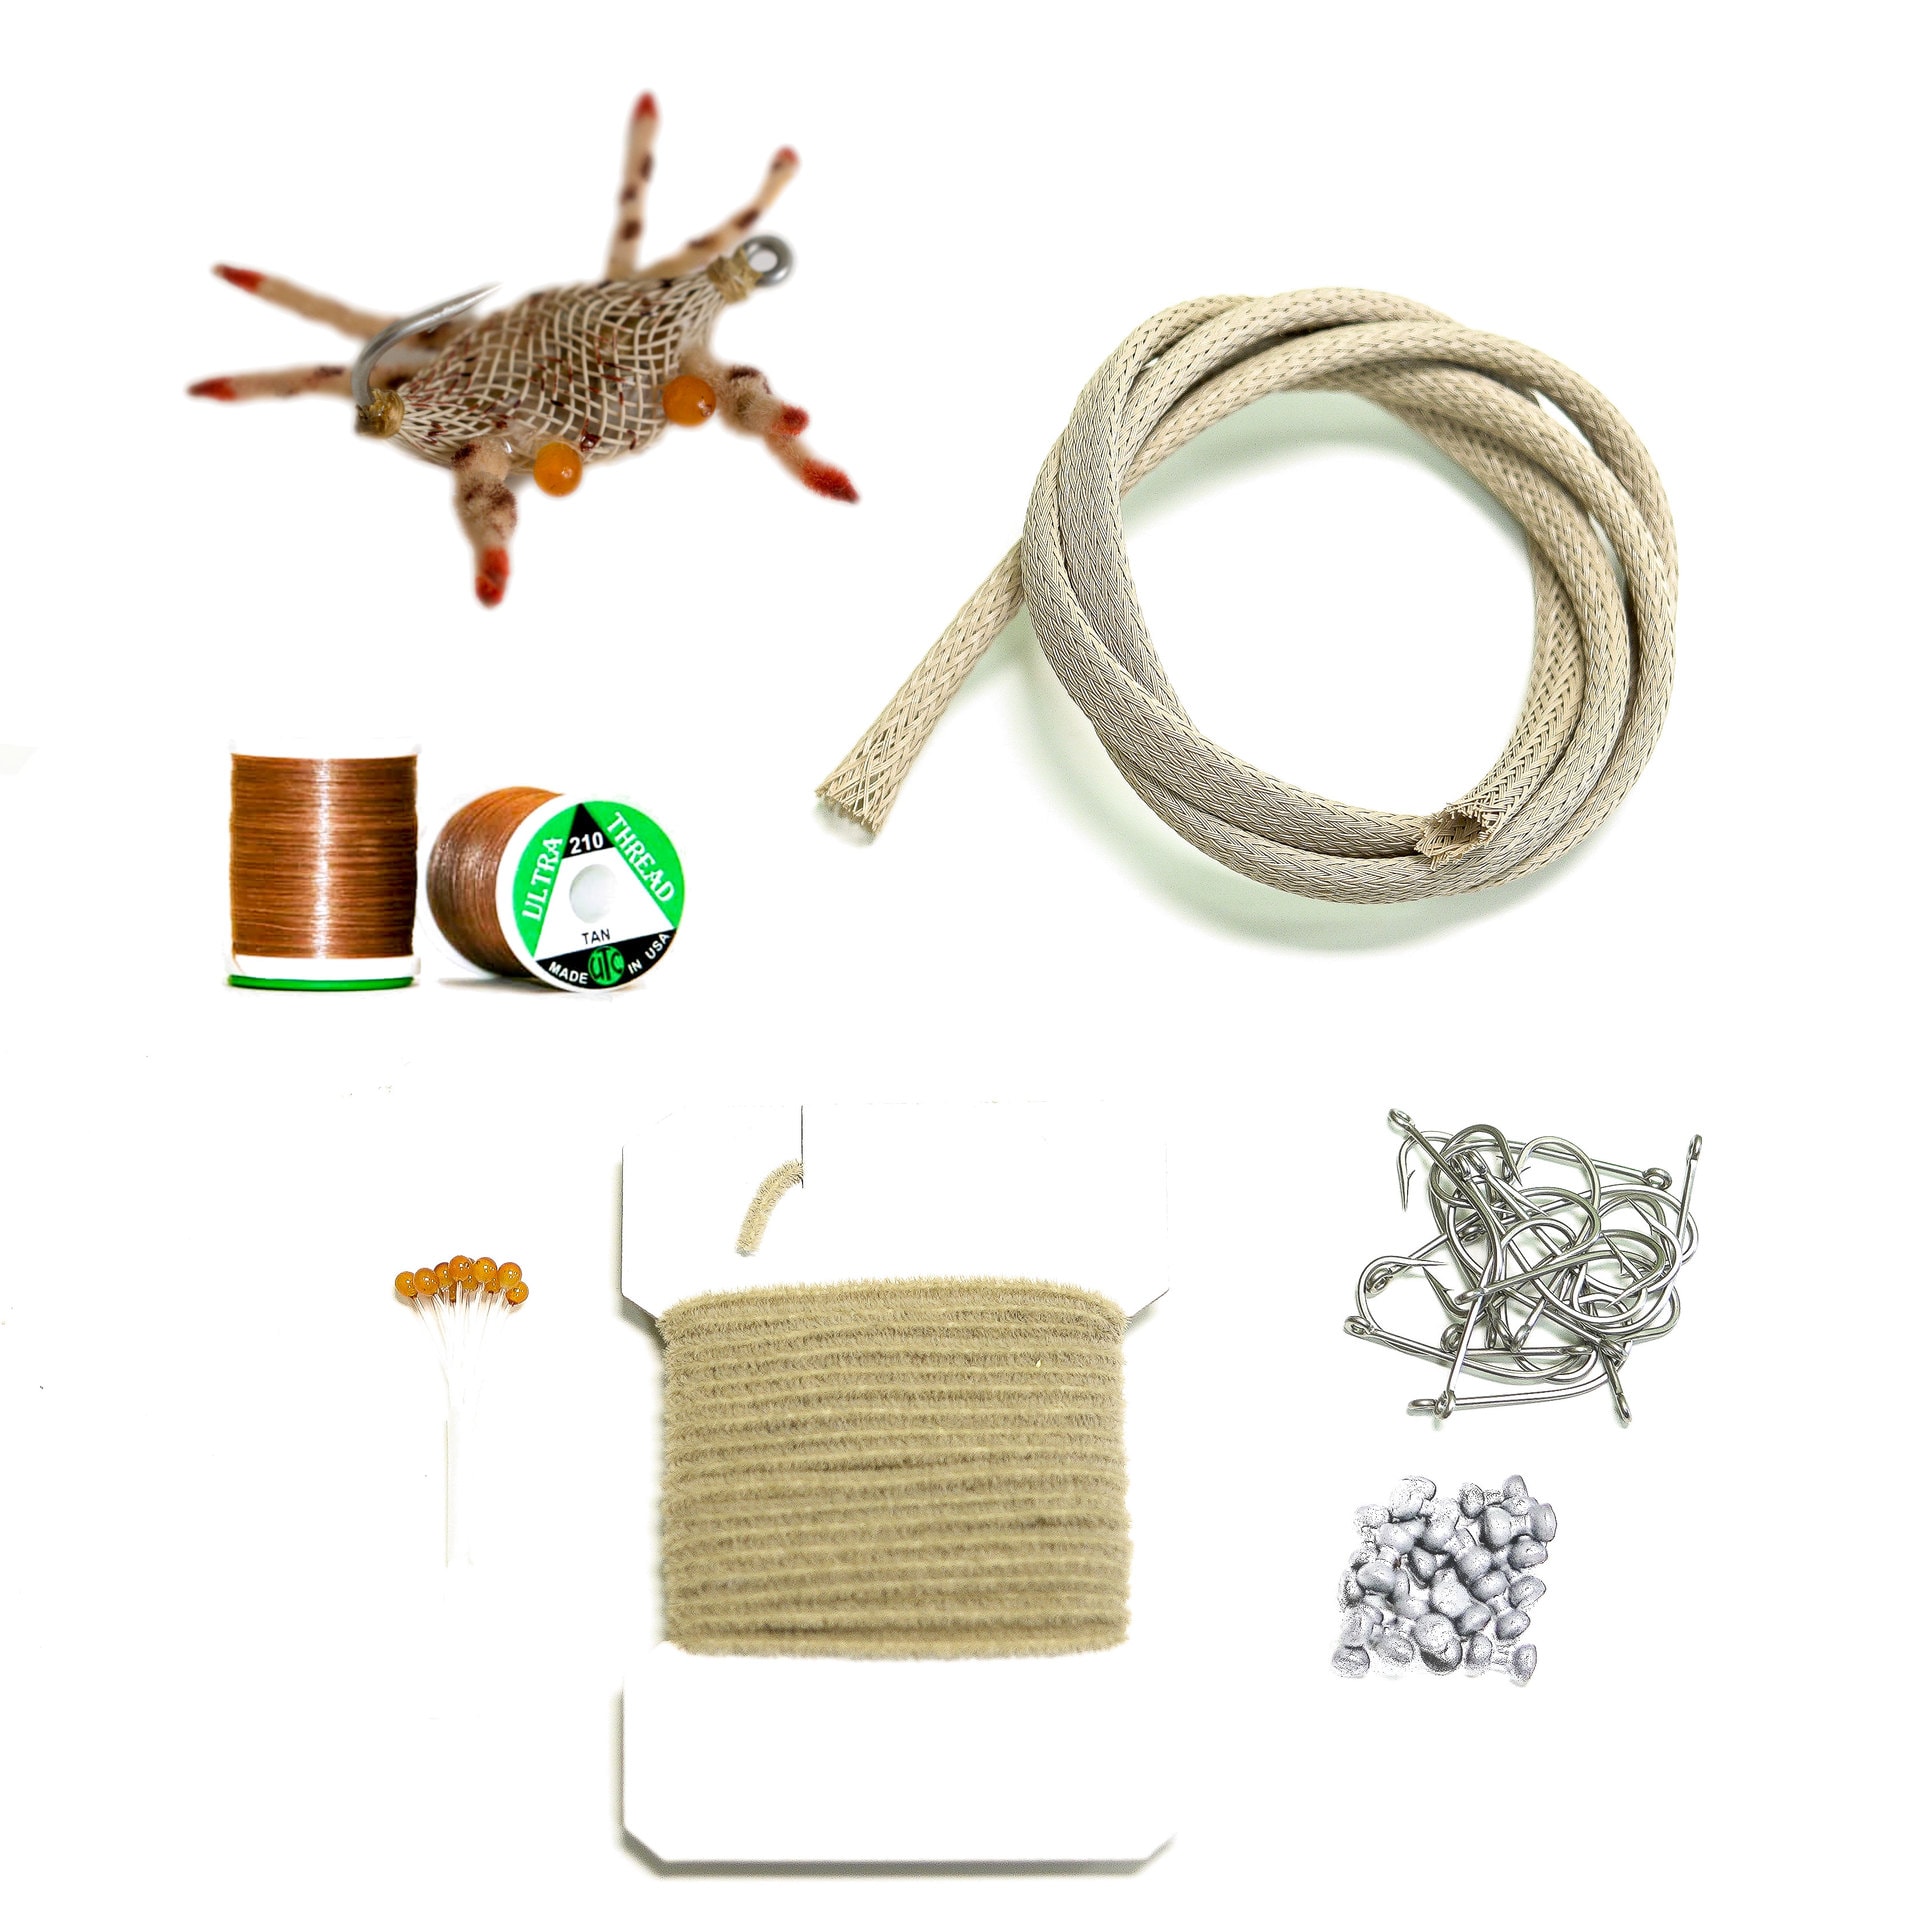 https://olefloridaflyshop.com/wp-content/uploads/2020/04/flexo-crab-materials-kit.jpg